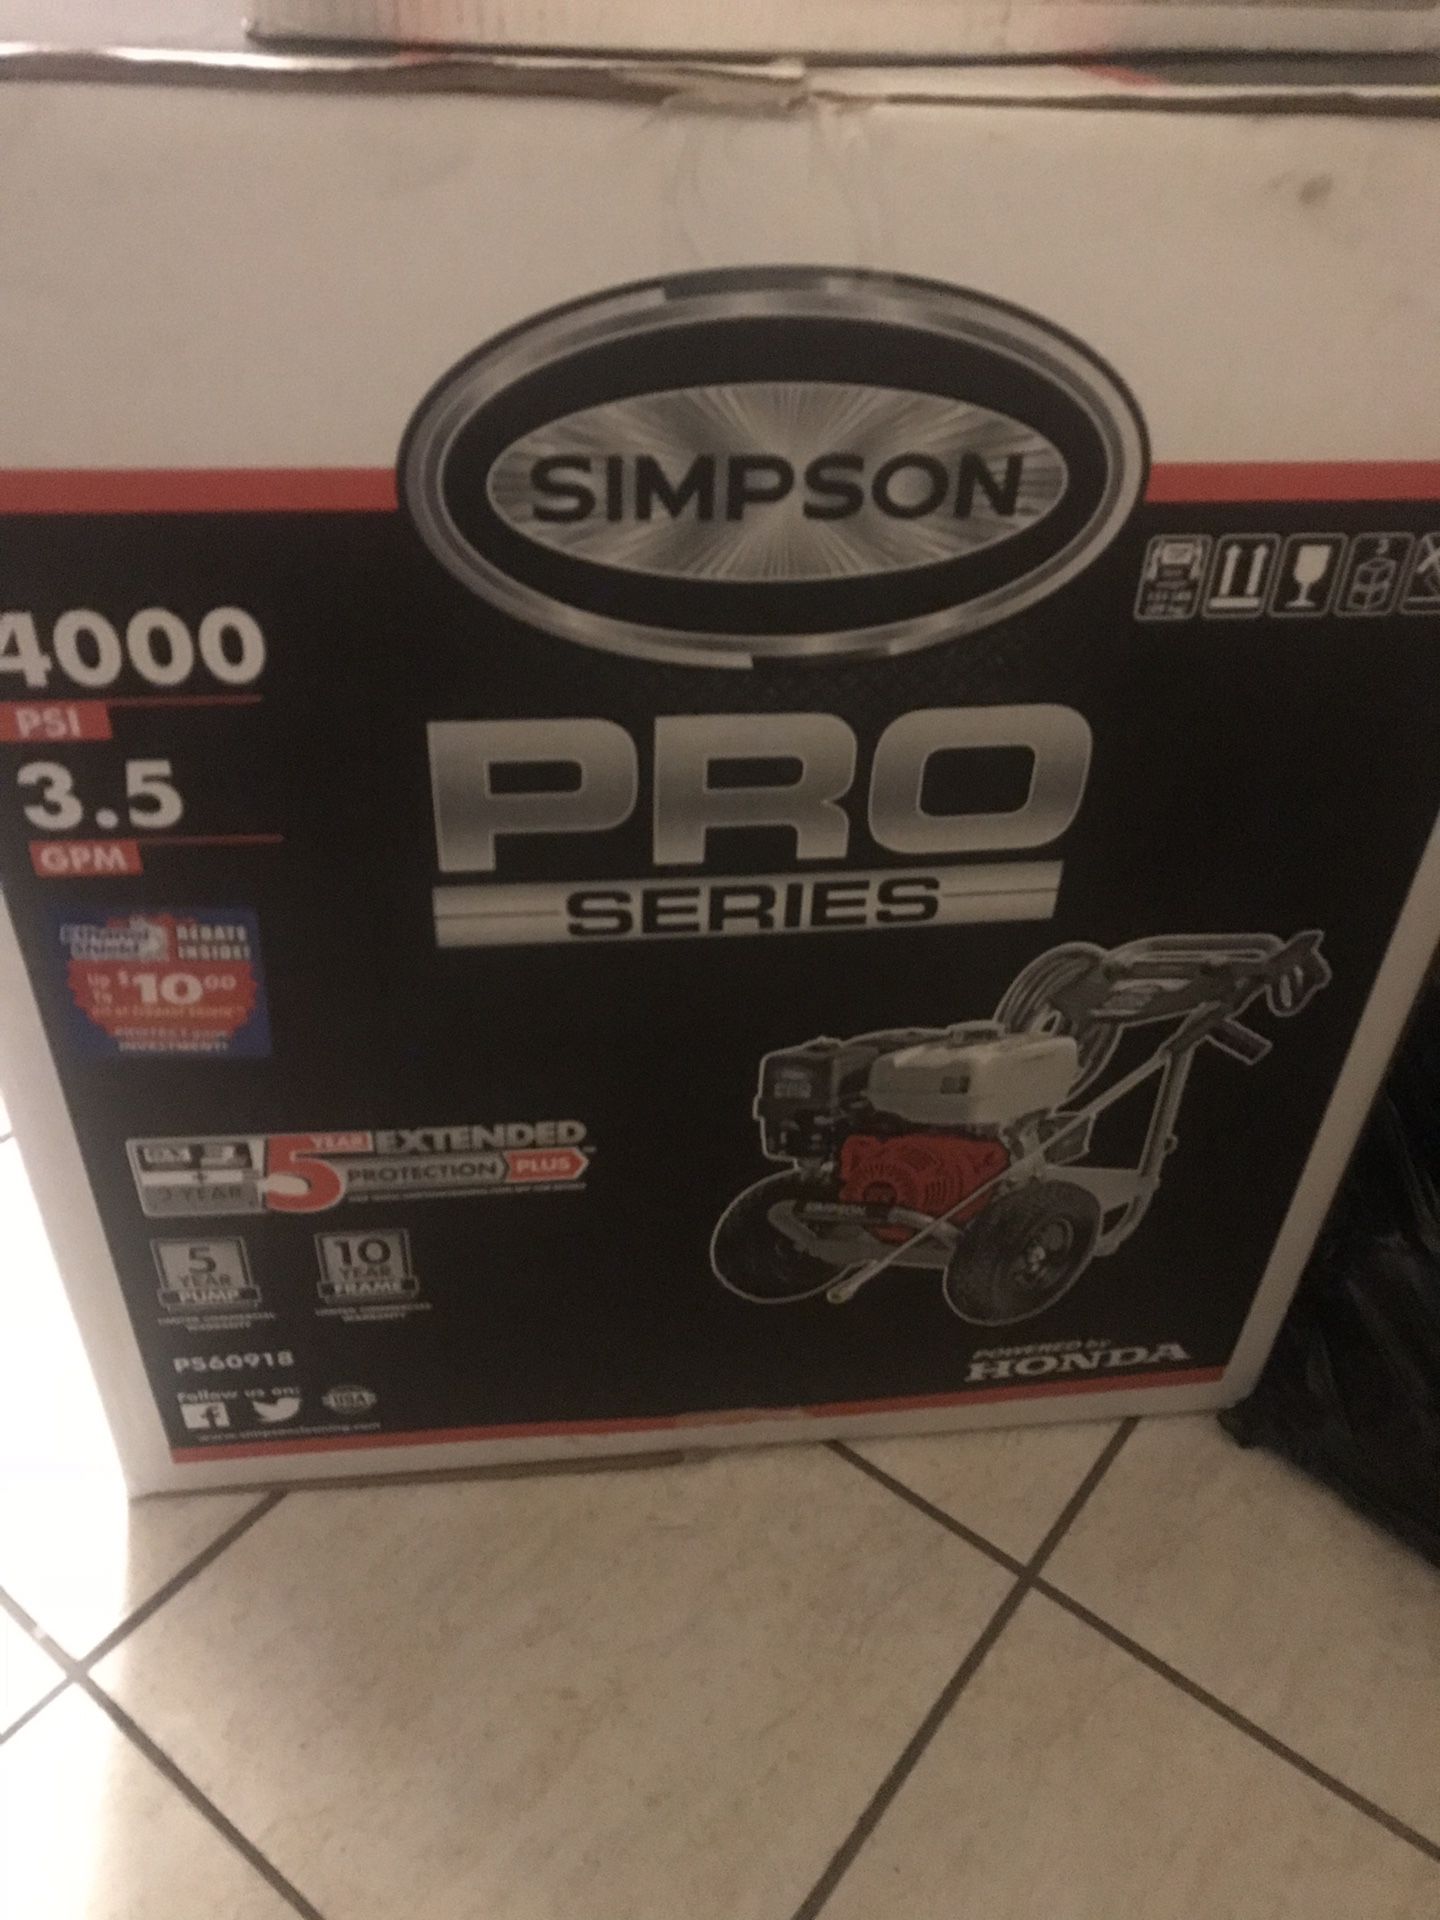 Simpson pro series pressure washer 4000psi